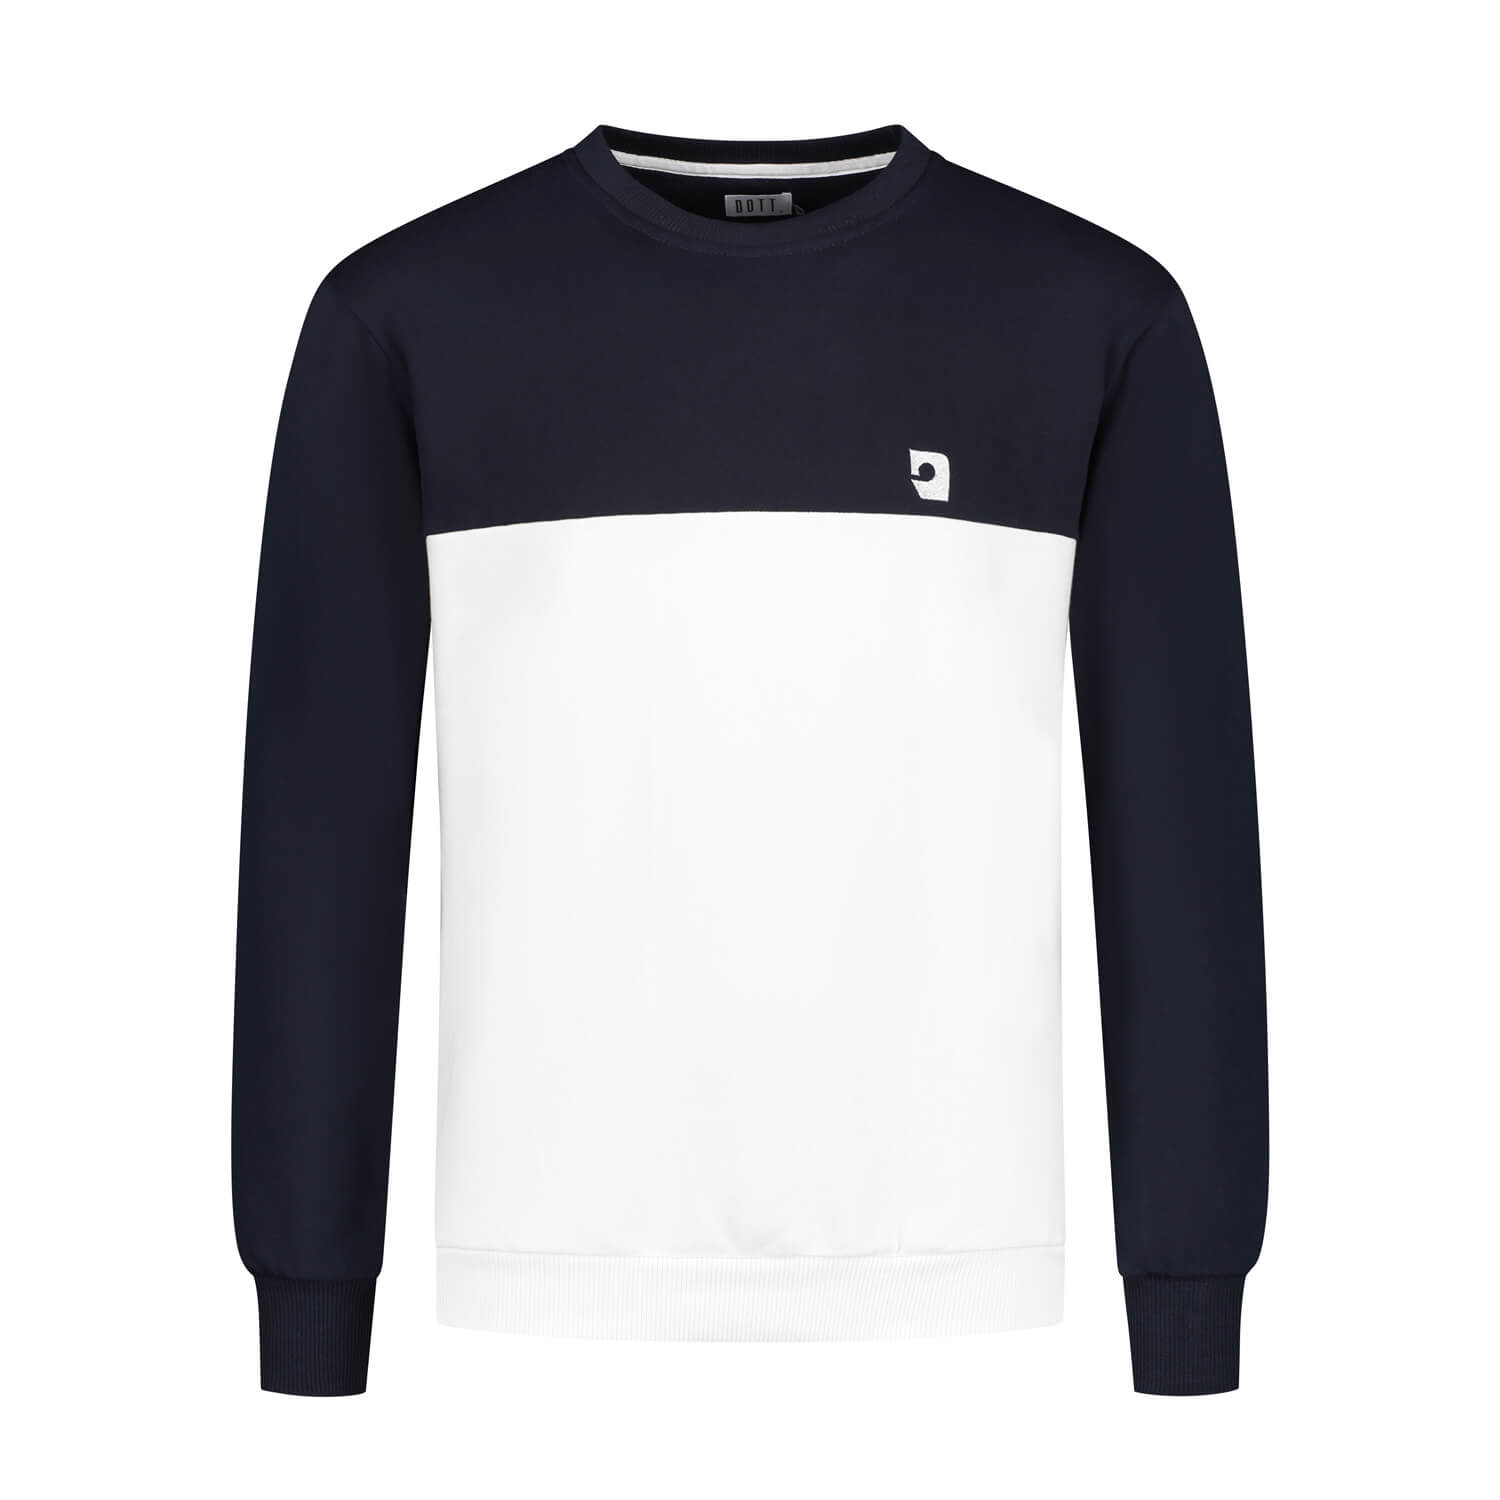 Men's organic sweatshirt - colorblock navy/white